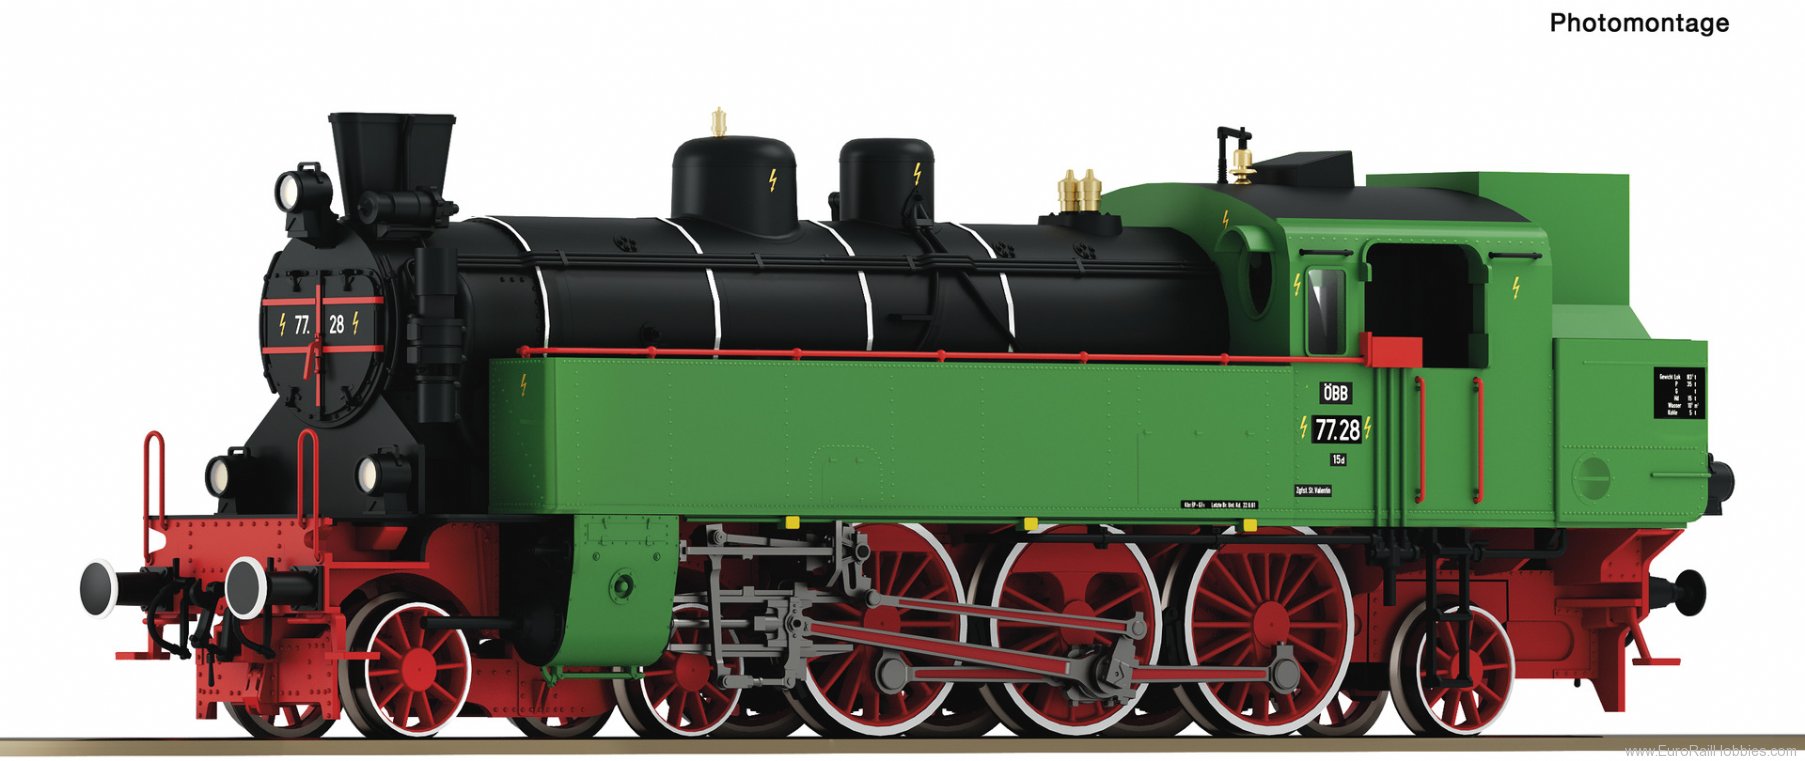 Roco 78084 Steam locomotive 77.28, ÃBB (AC Digital So